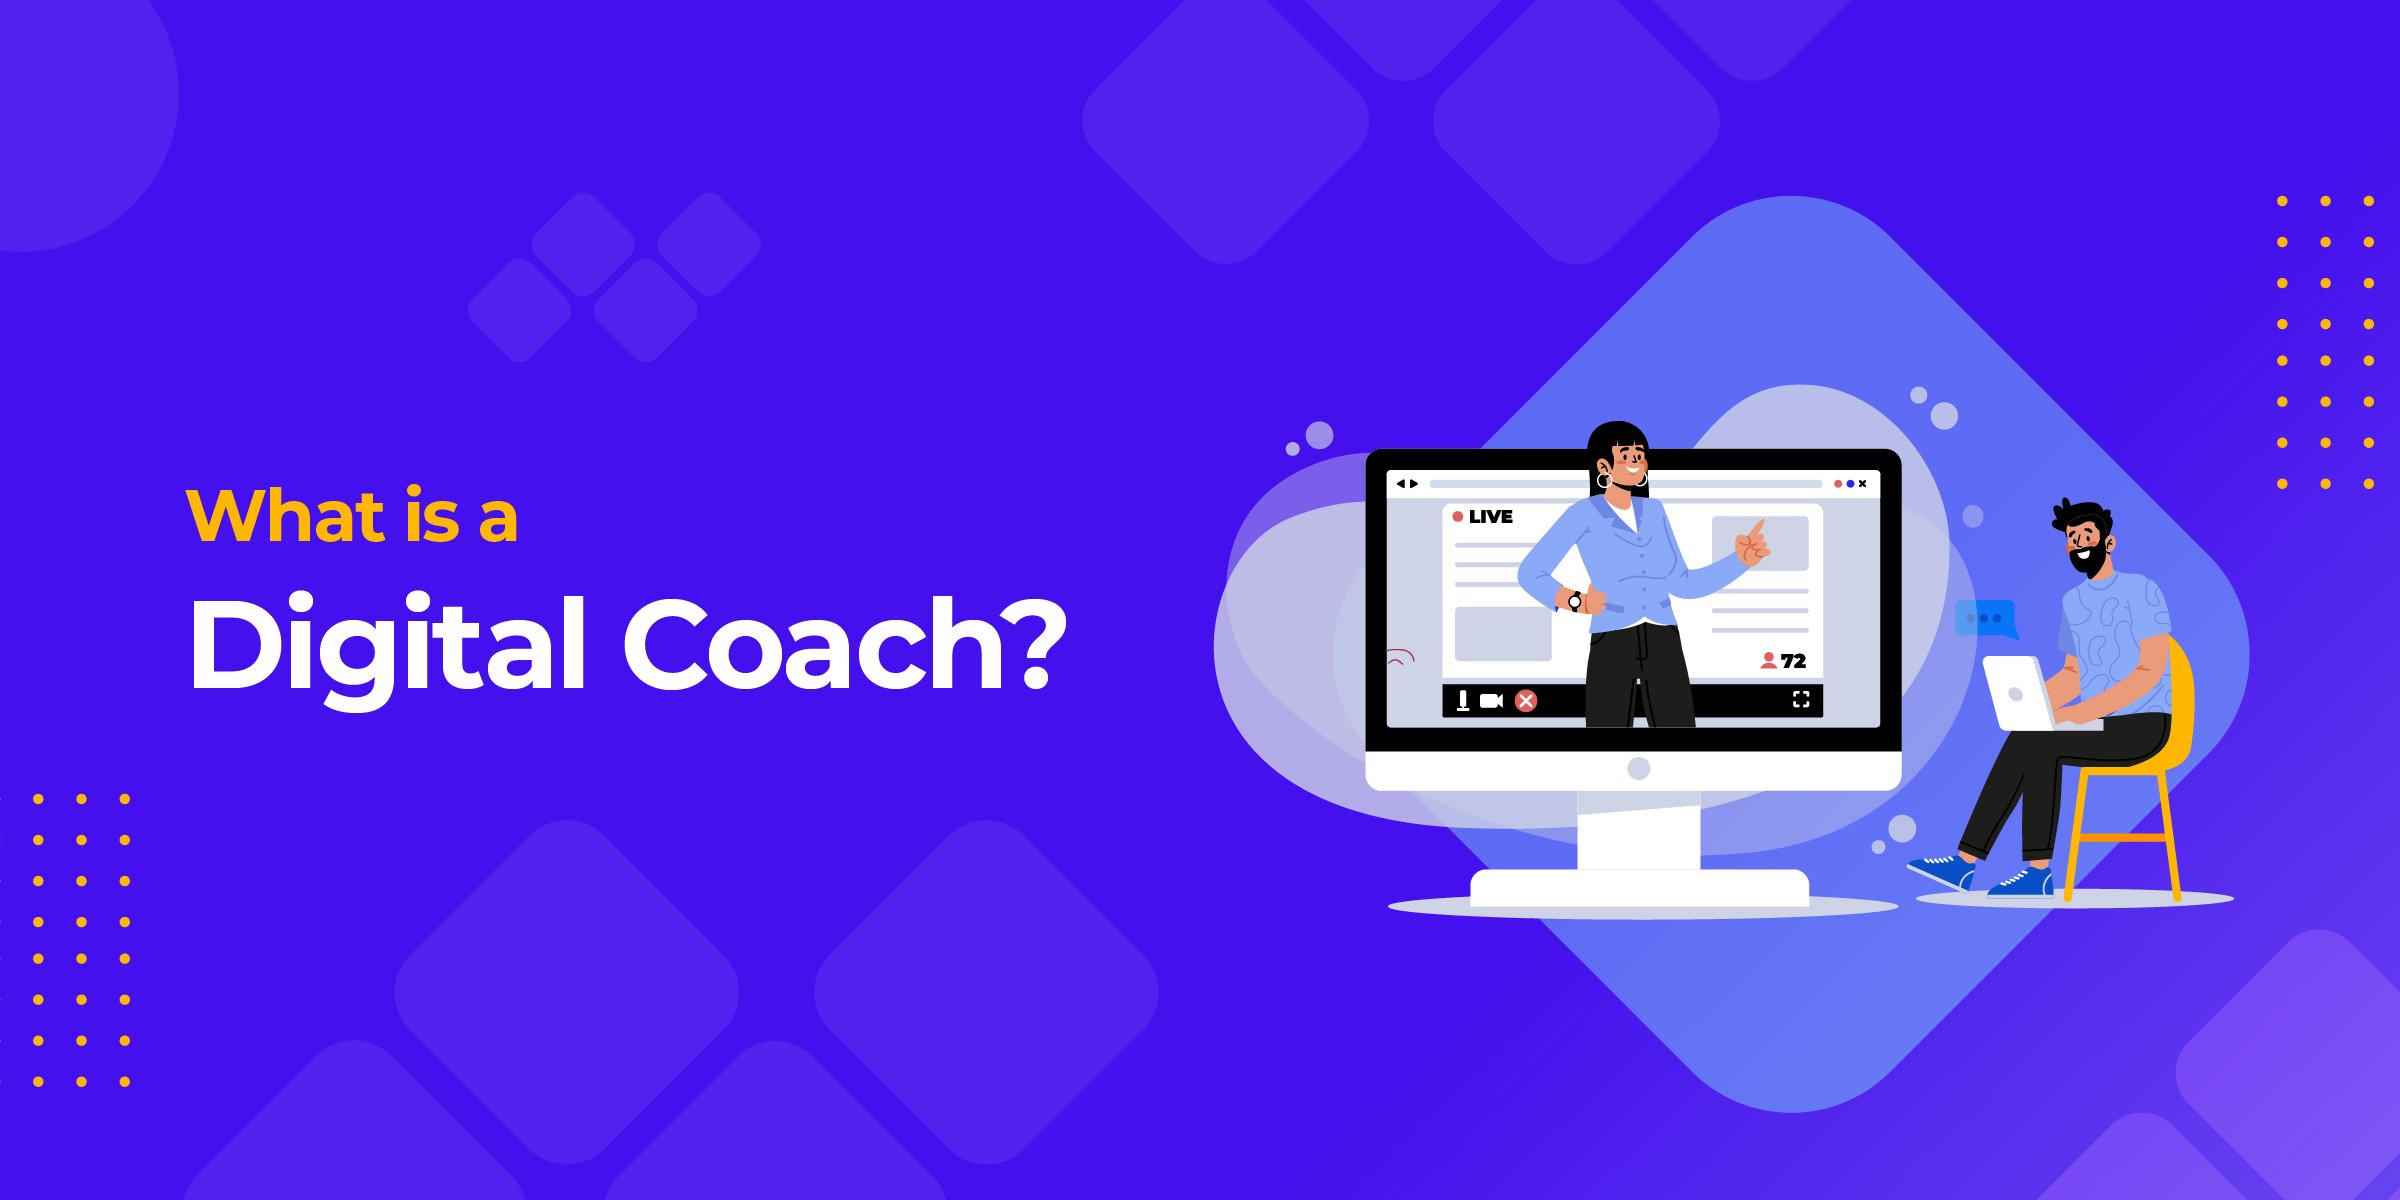 What Is a Digital Coach